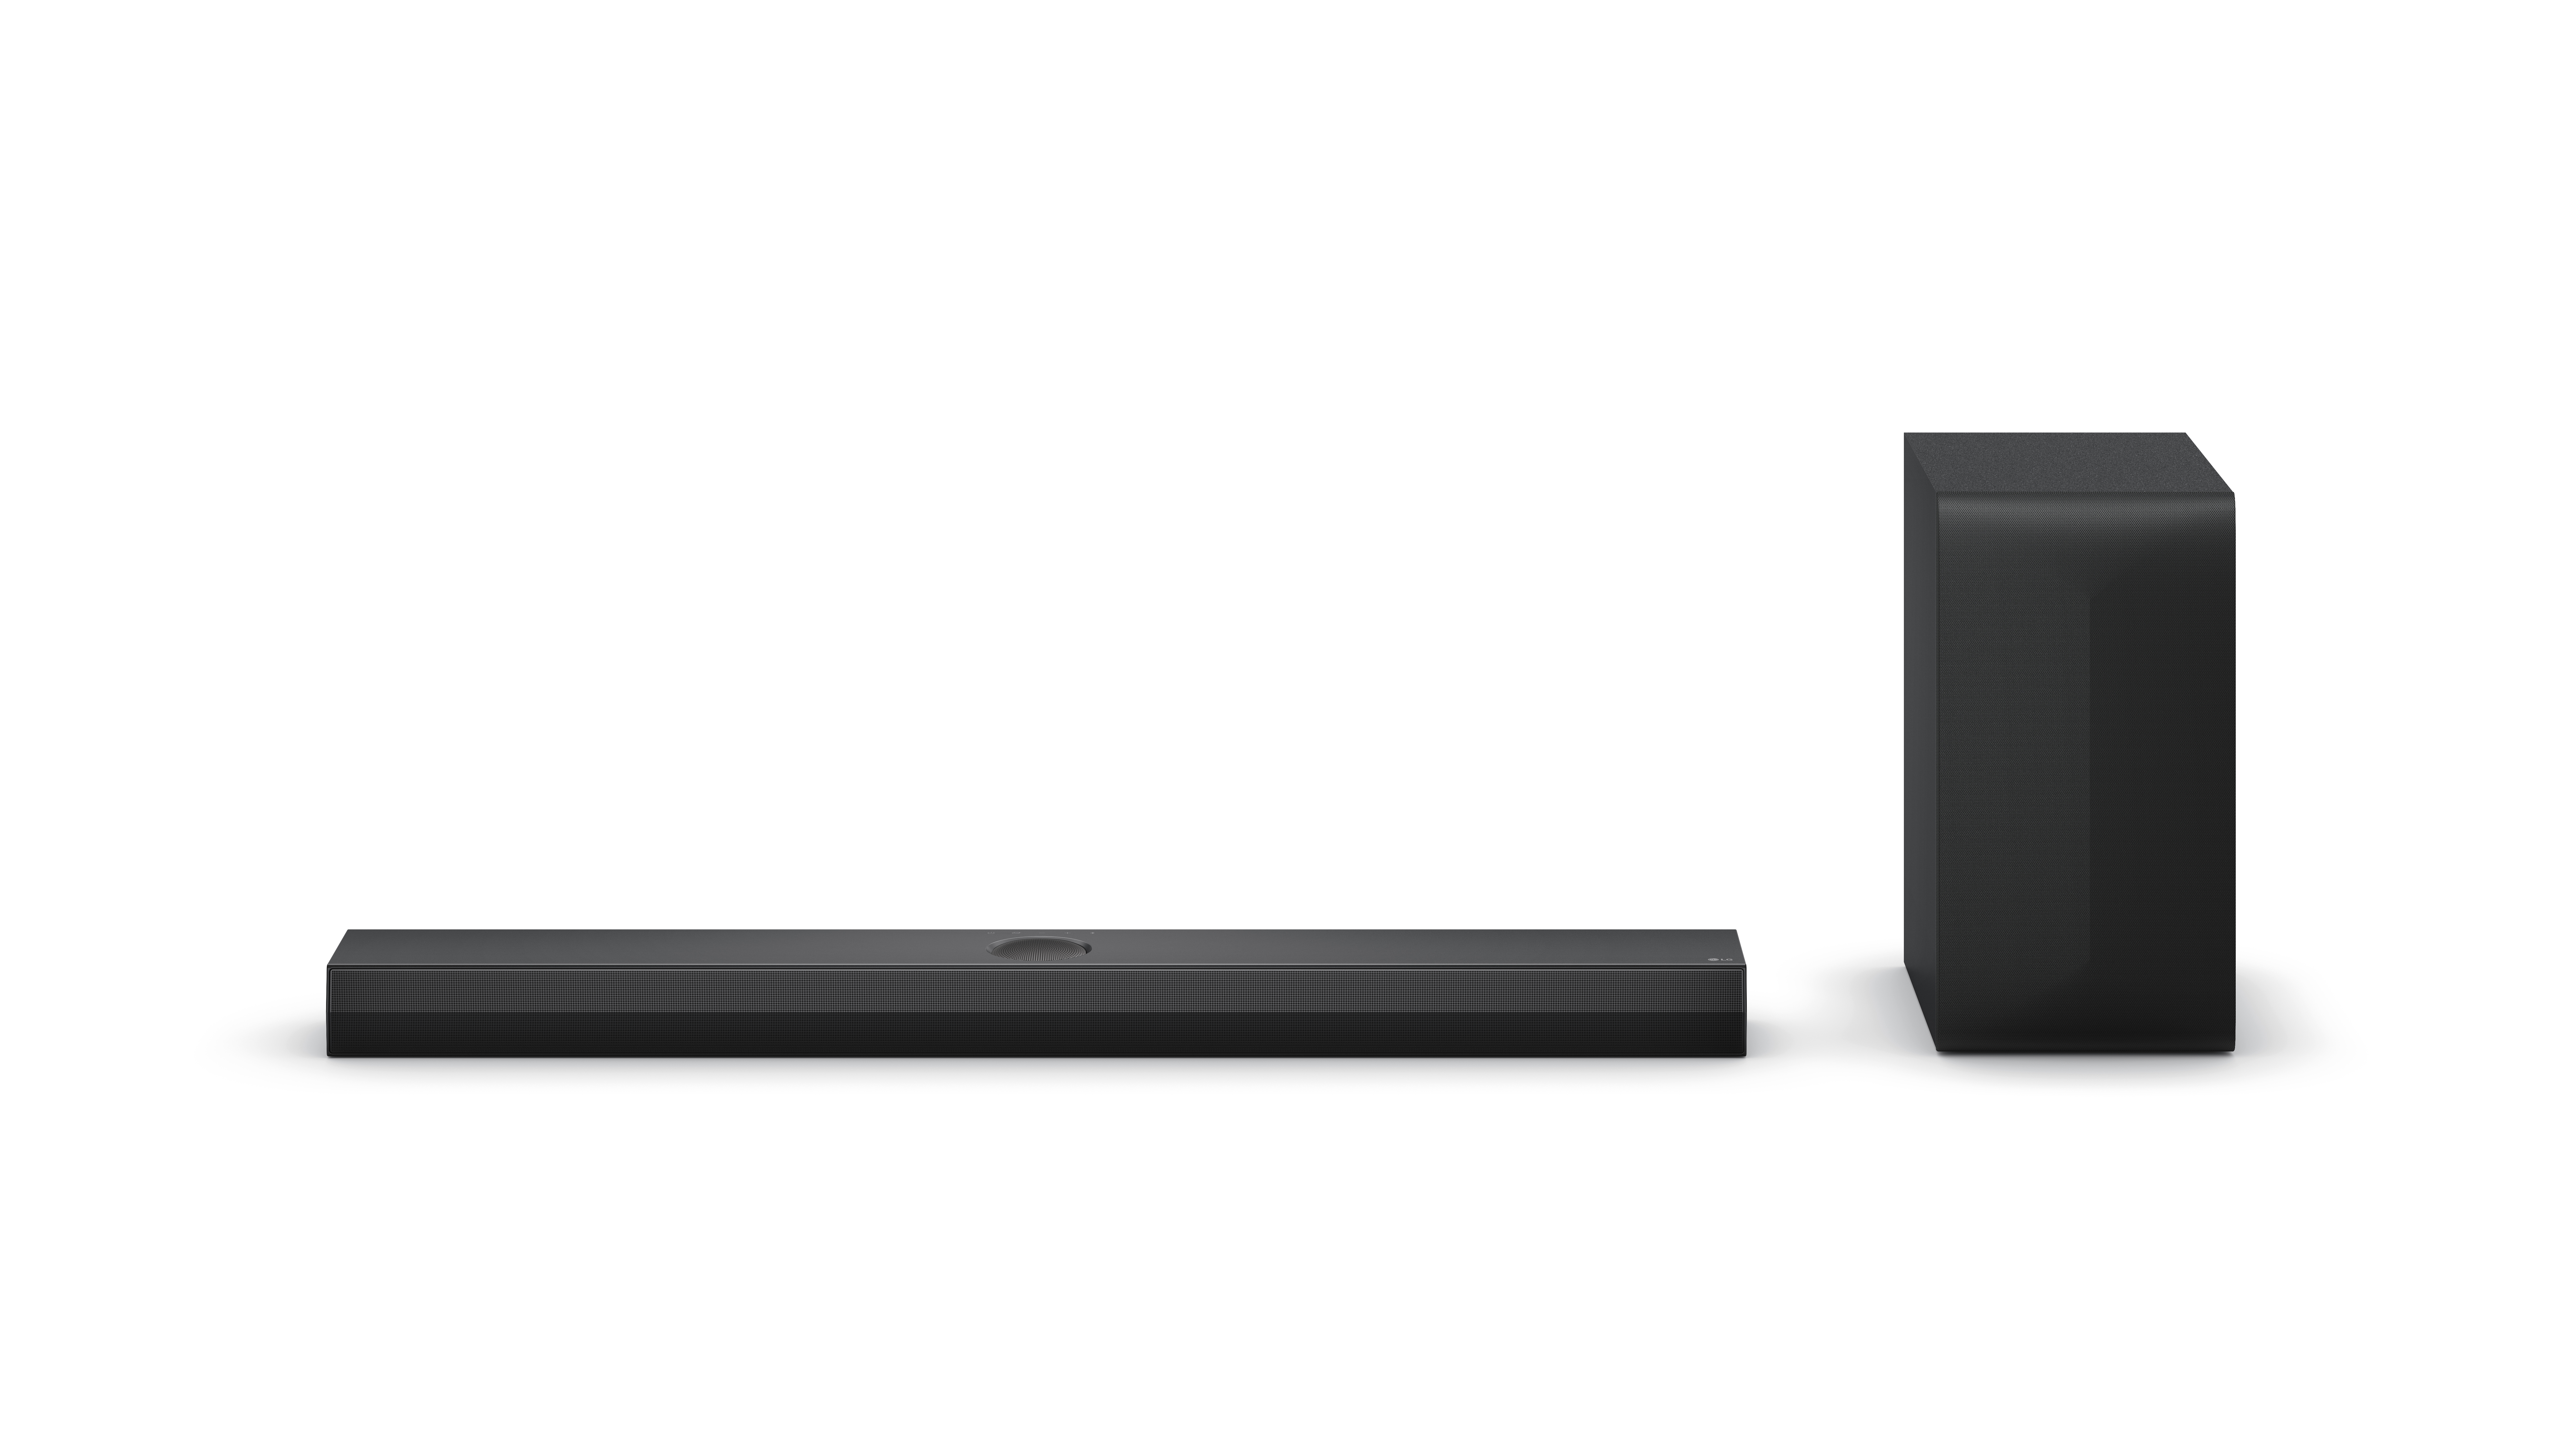 Of 3 günstig Kaufen-LG DS70TY 3.1.1 Dolby Atmos Soundbar, 400 Watt Subwoofer schwarz. LG DS70TY 3.1.1 Dolby Atmos Soundbar, 400 Watt Subwoofer schwarz <![CDATA[• 3.1.1 Dolby Atmos Soundbar mit 400 Watt • Center Upfiring Speaker in Soundbar • Dolby Atmos Music • Empfo